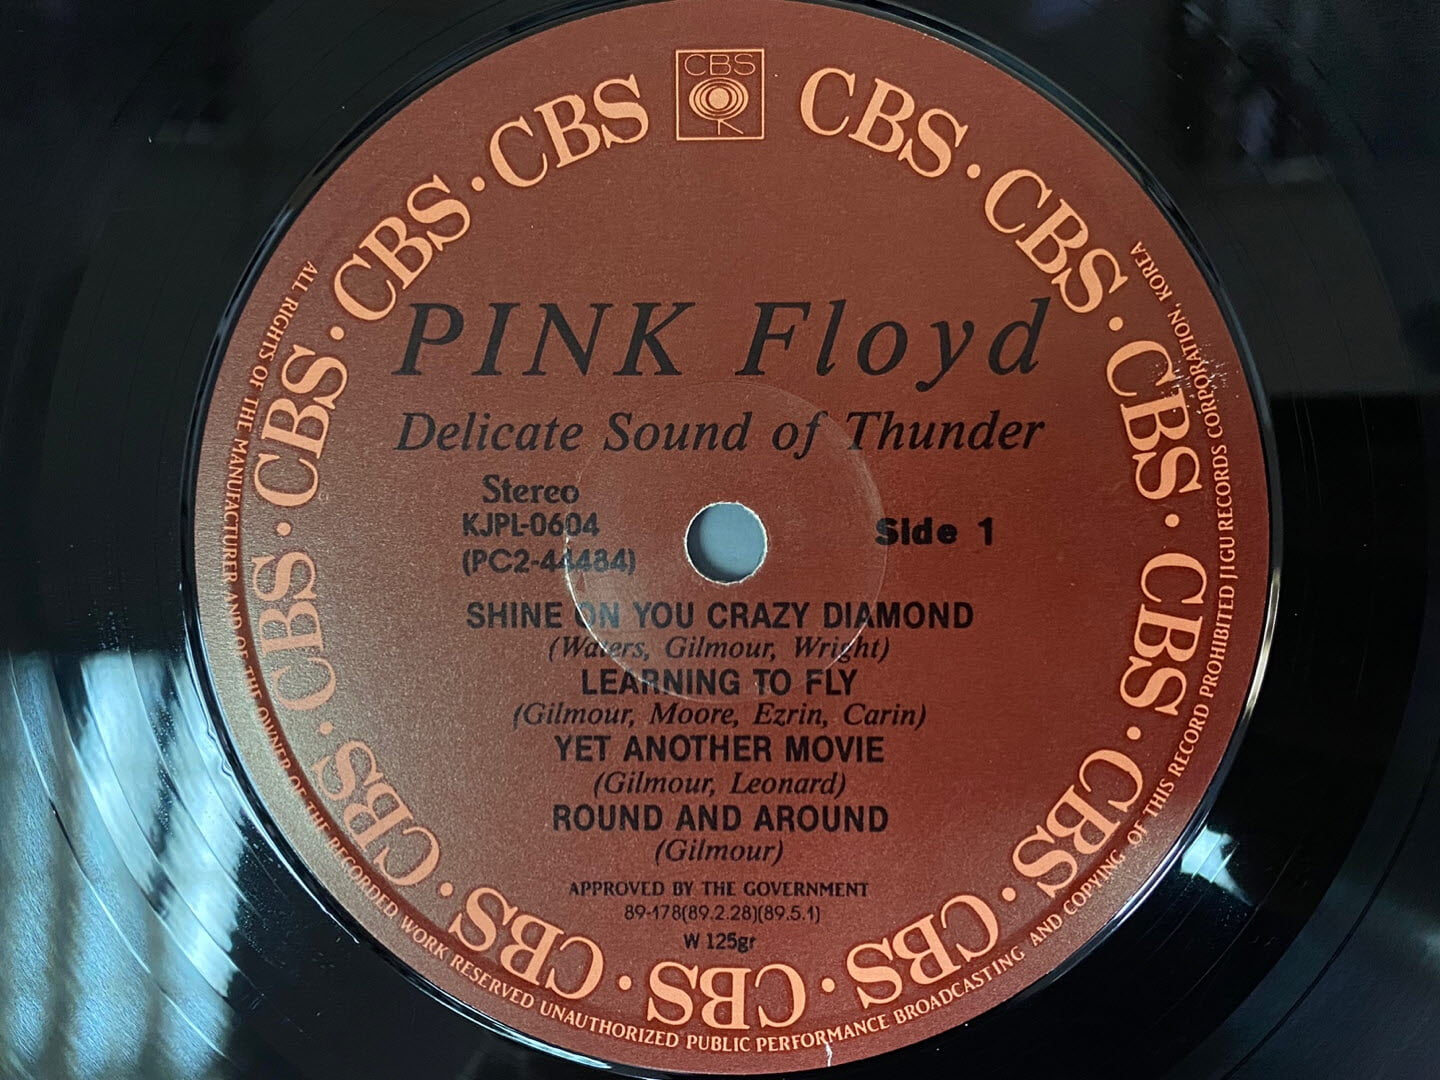 [LP] 핑크 플로이드 - Pink Floyd - Delicate Sound Of Thunder Live LP [지구-라이센스반]